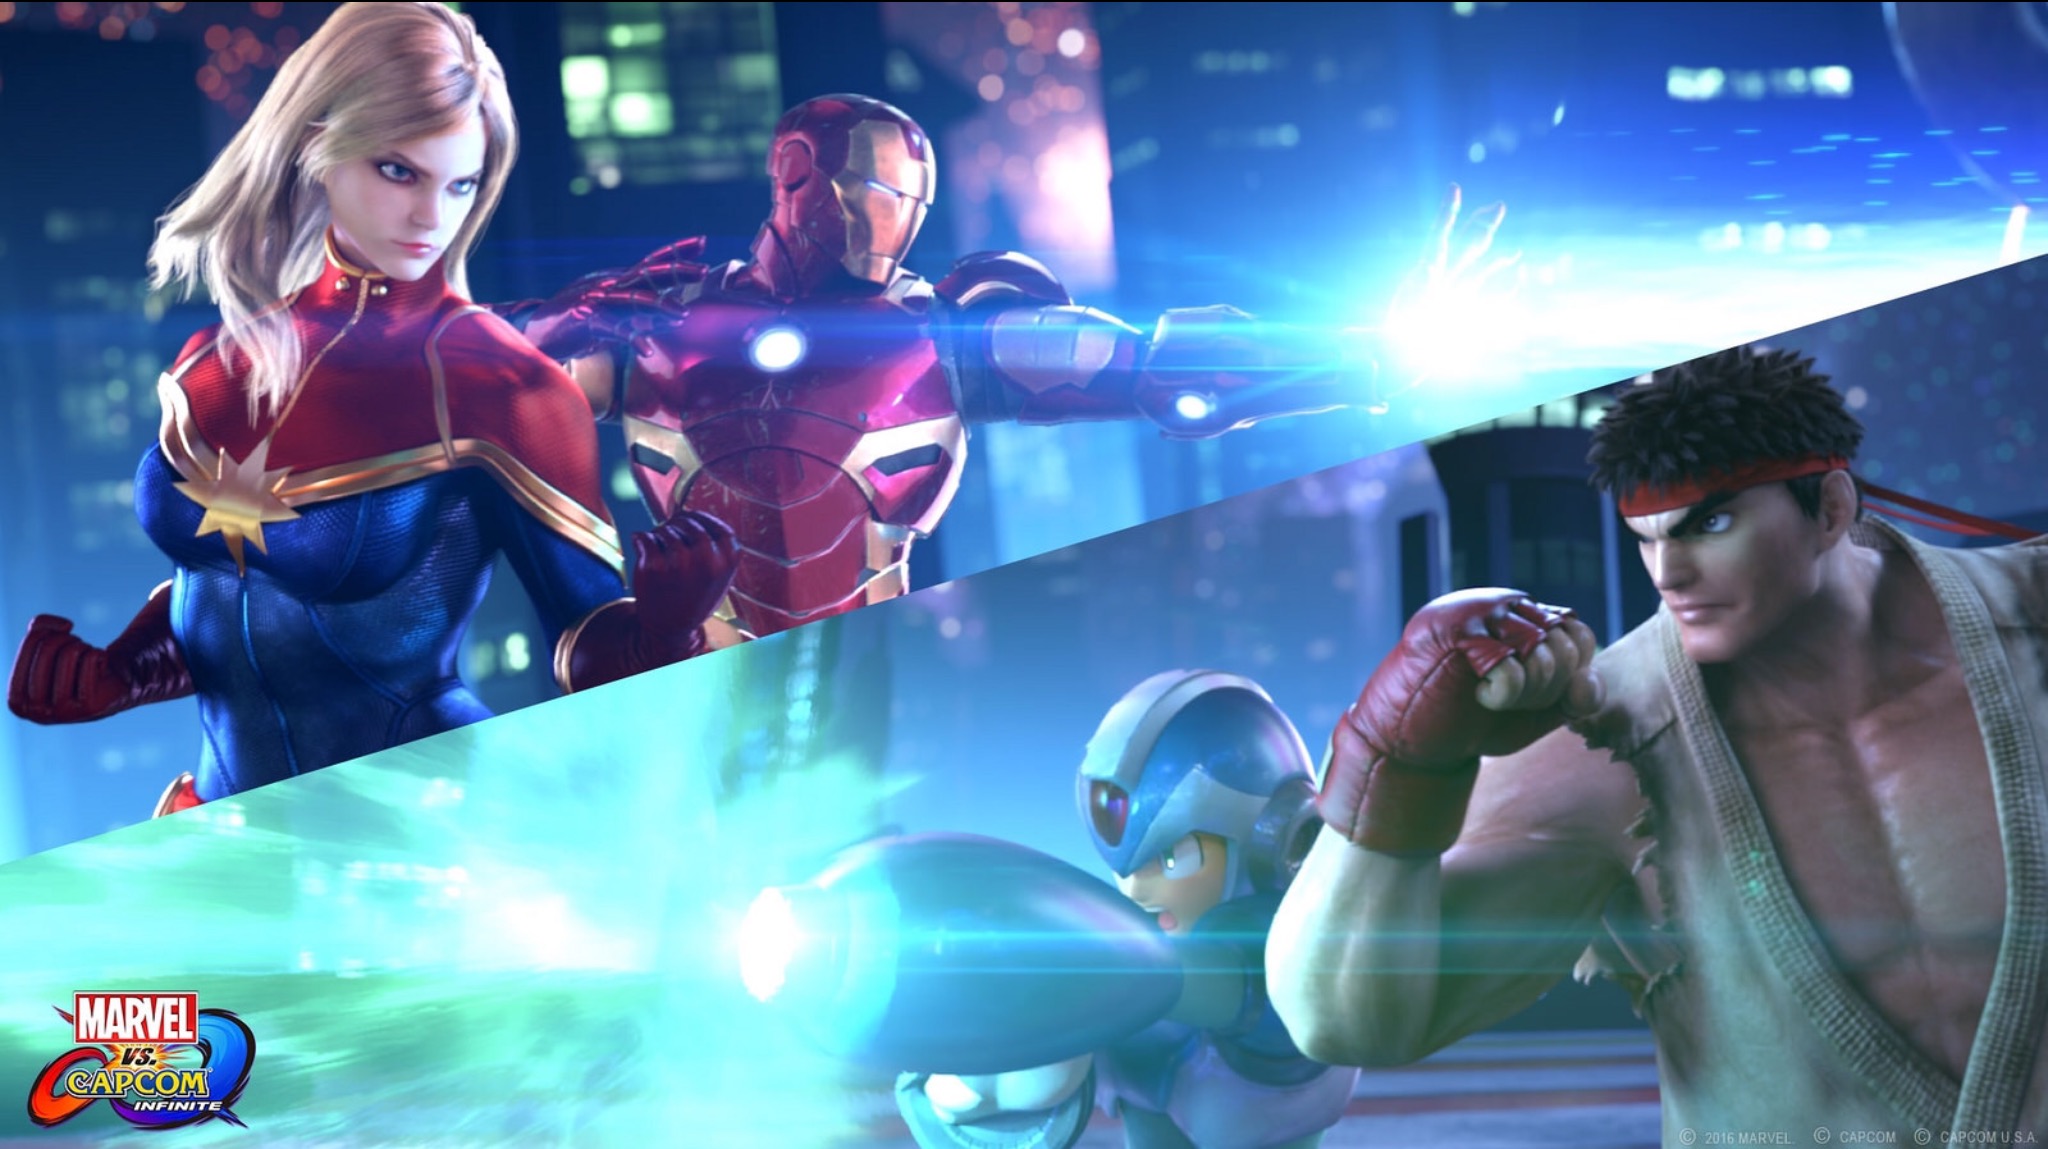 Next entry in Marvel vs Capcom fighting series, ‘Infinite’, announced for 2017 [Trailer]